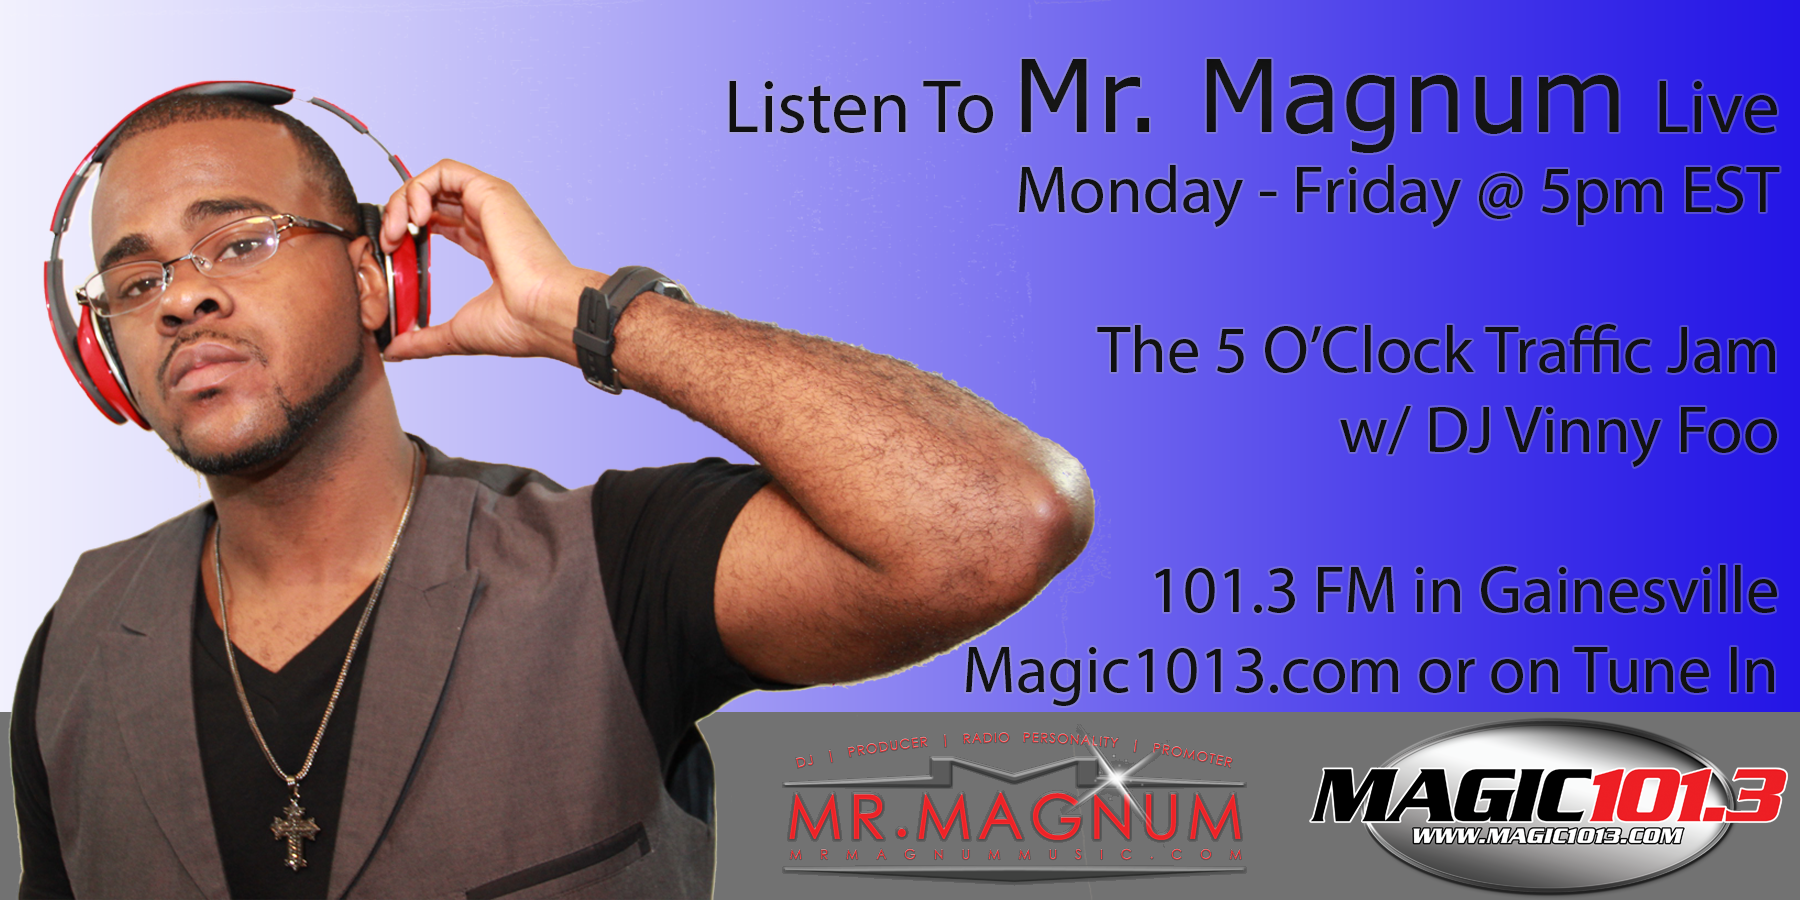 Listen To Mr. Magnum Live on Magic 101.3